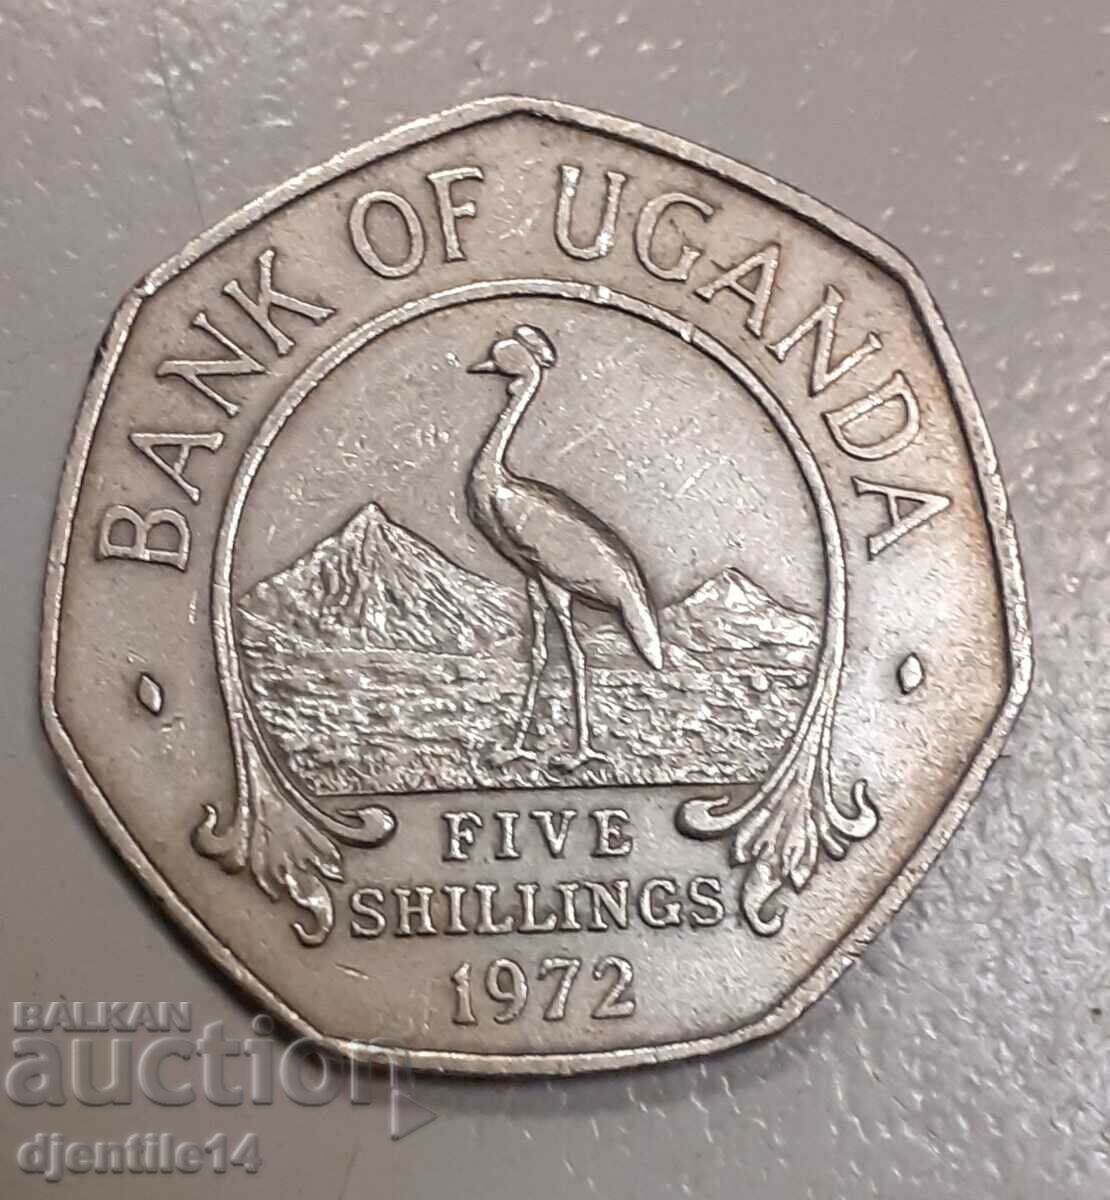 Uganda coin